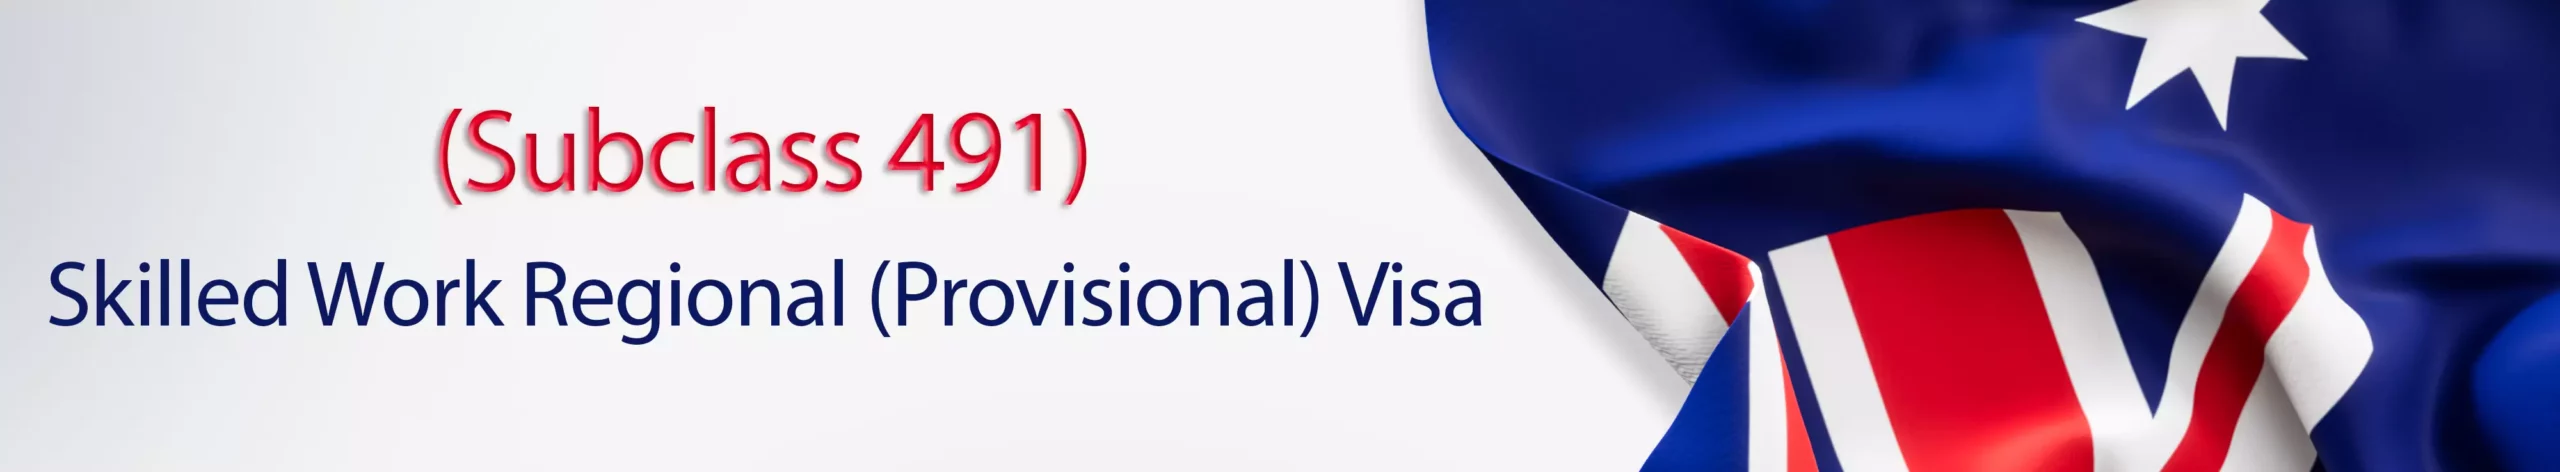 Skilled Work Regional (Provisional) Visa (subclass 491) banner